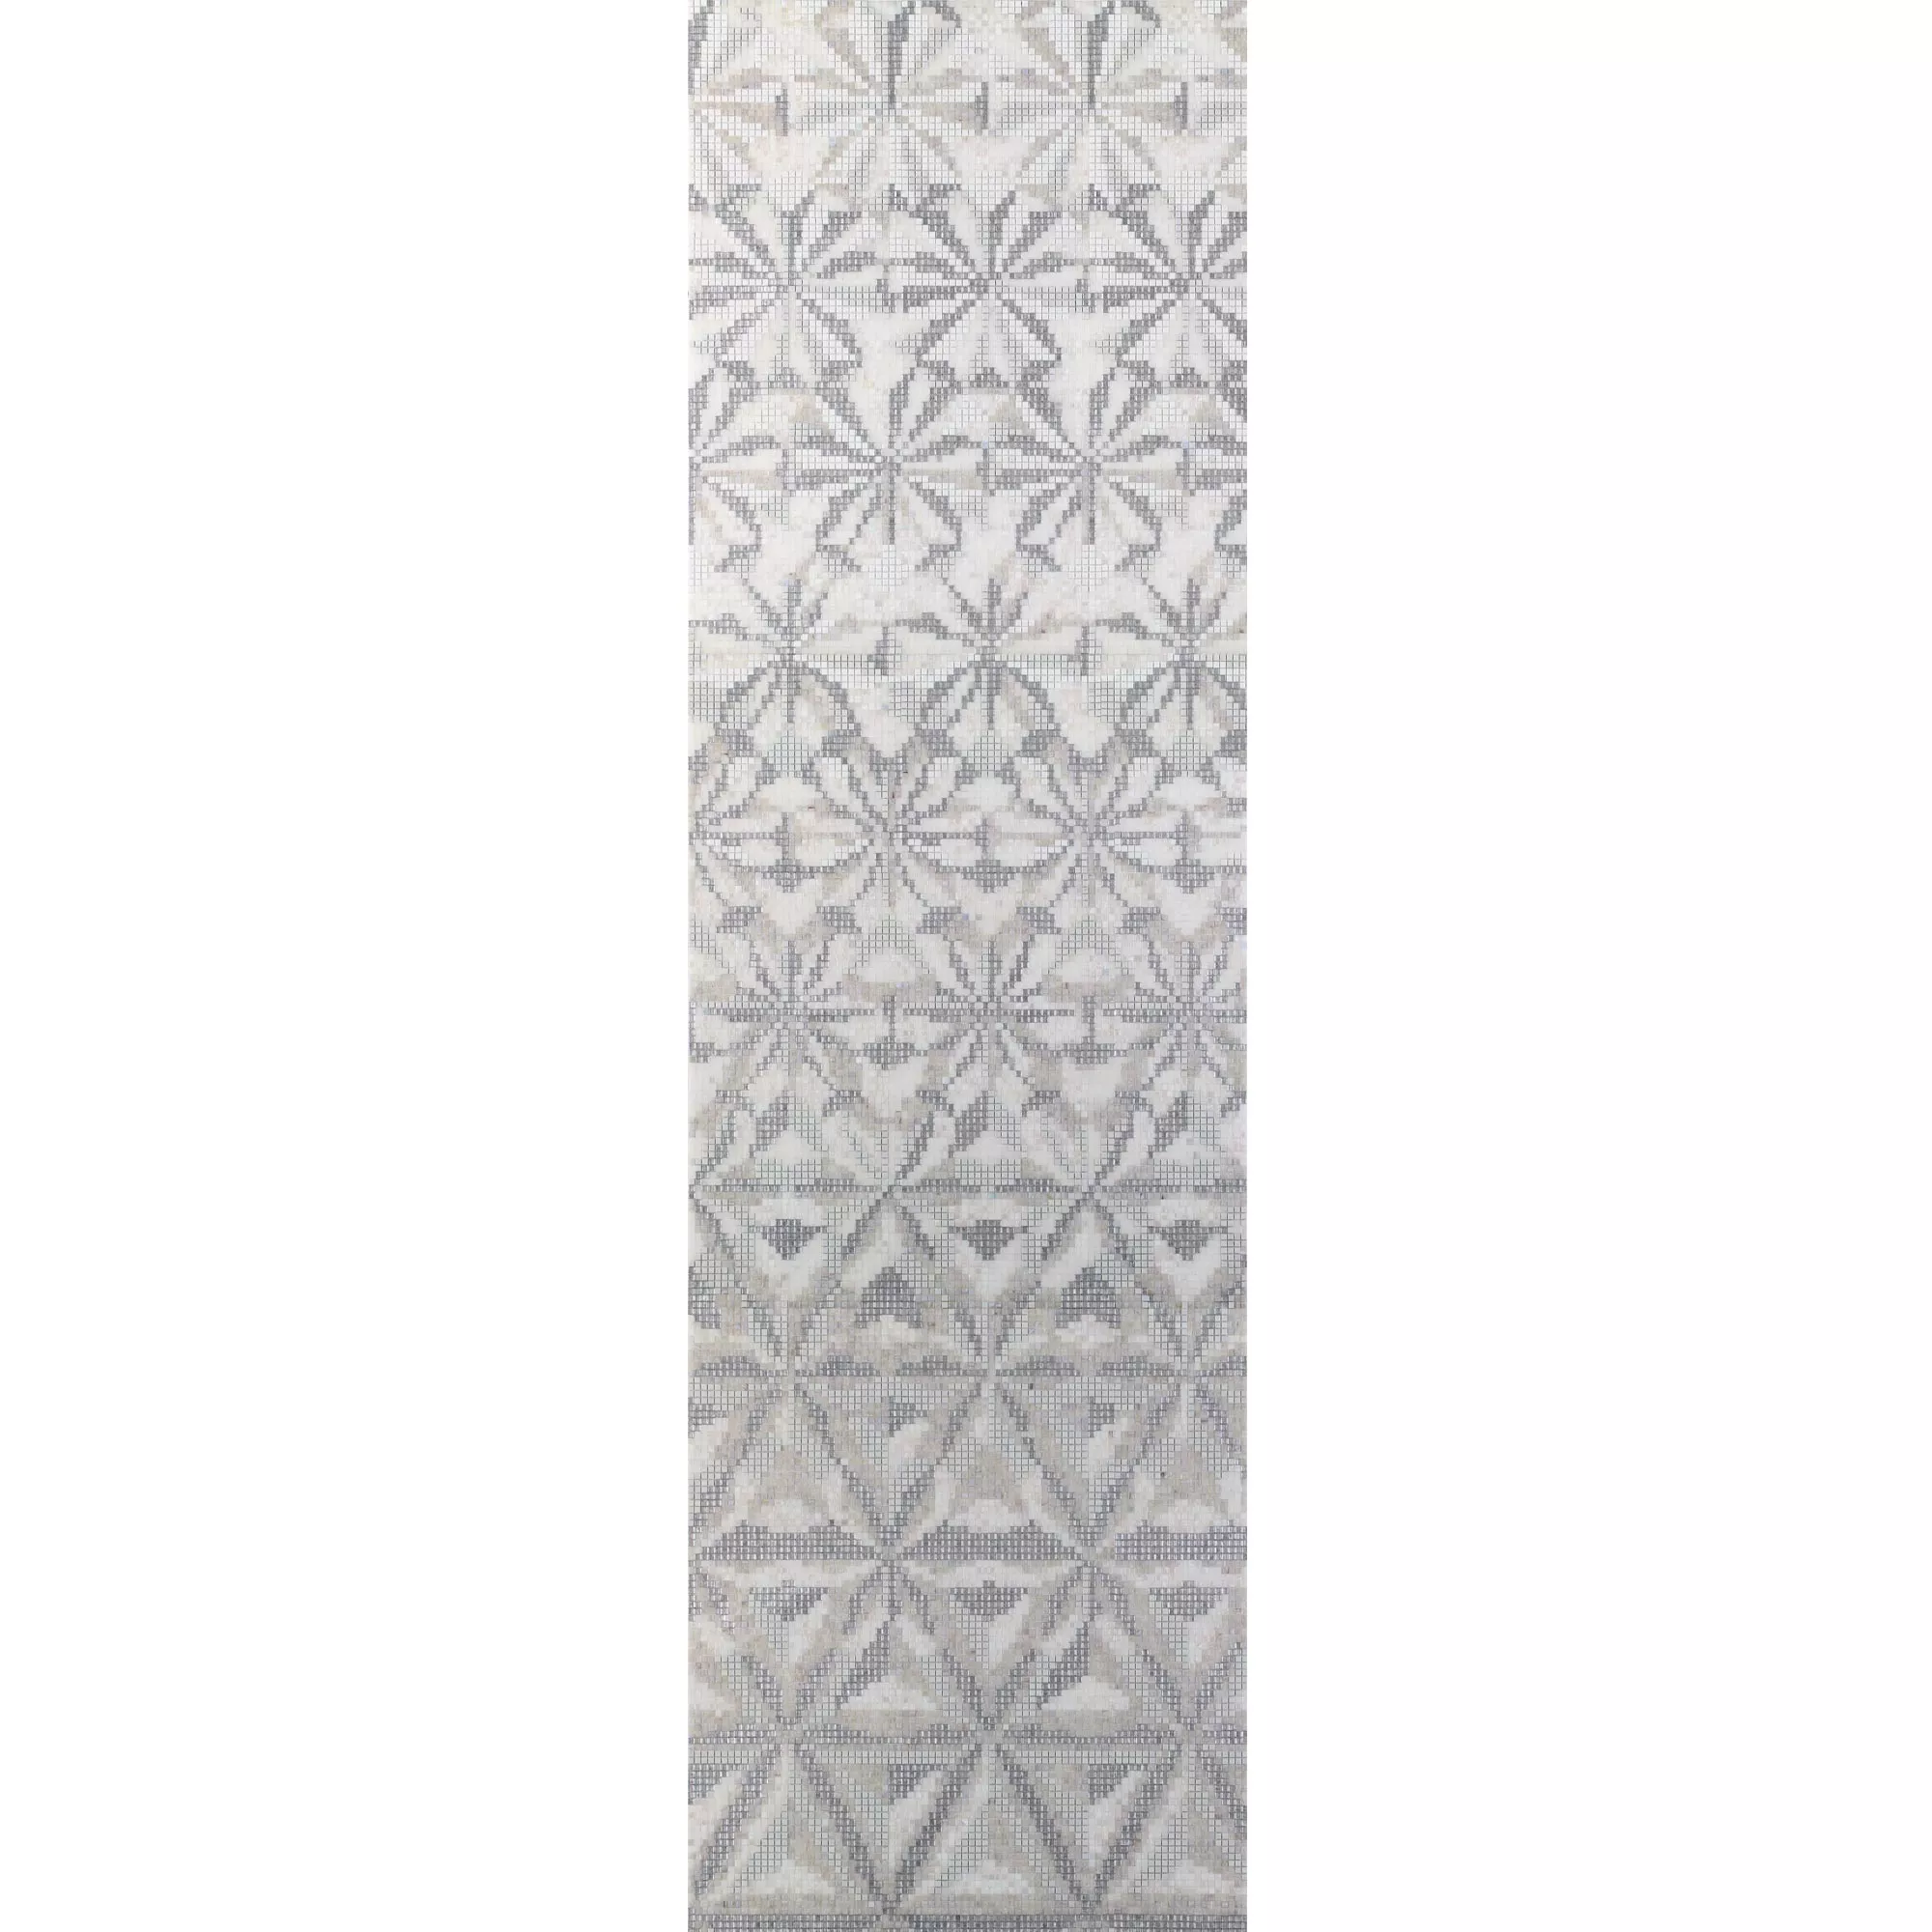 Mozaic De Sticlă Imagine Magicflower White 100x240cm